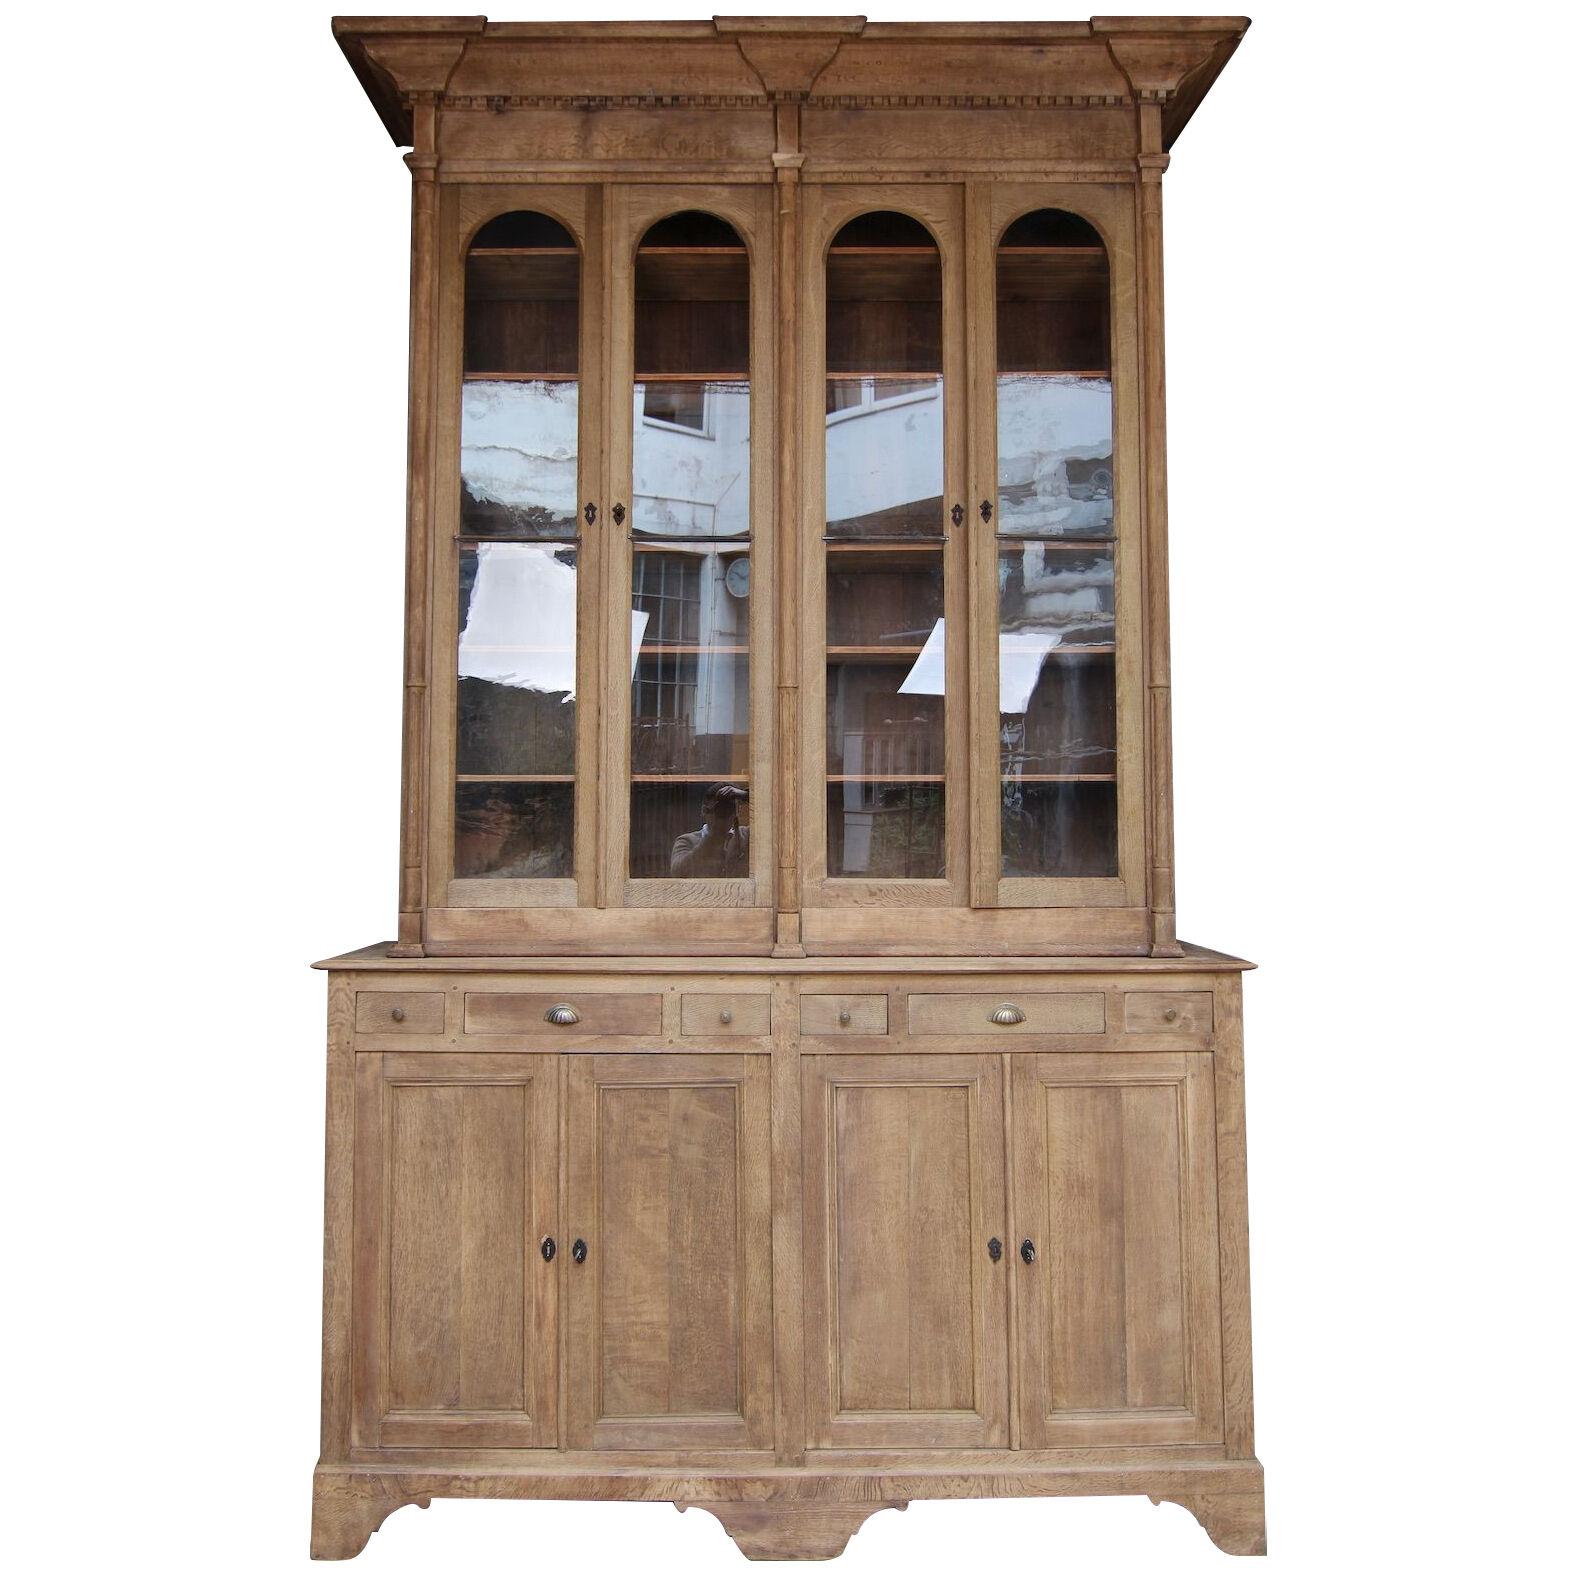 Large 19th Century Oak Vitrine Cabinet or Bookcase